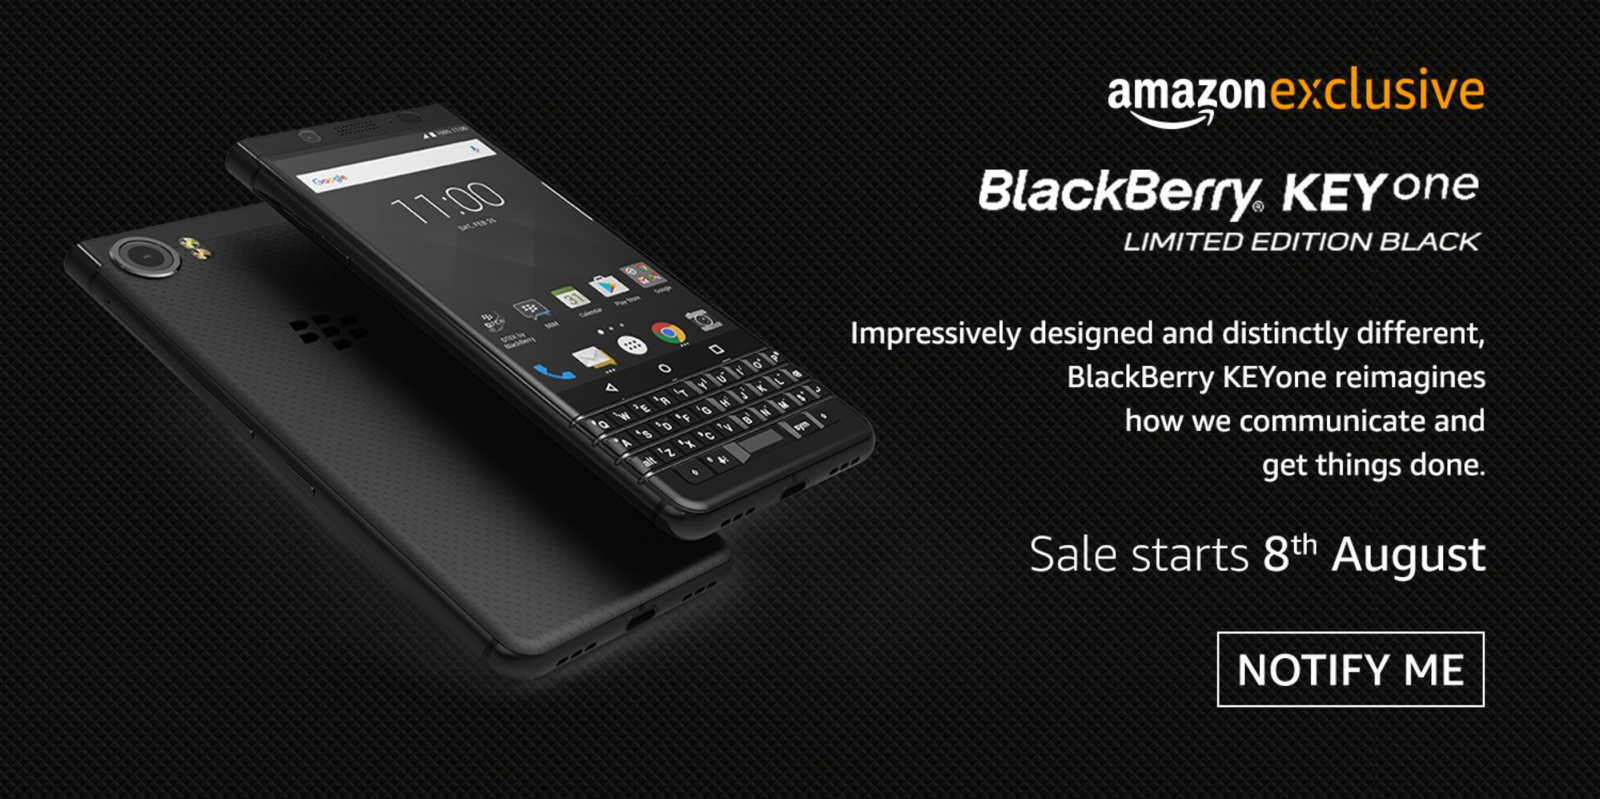 BlackBerry KeyOne Limited Edition Black